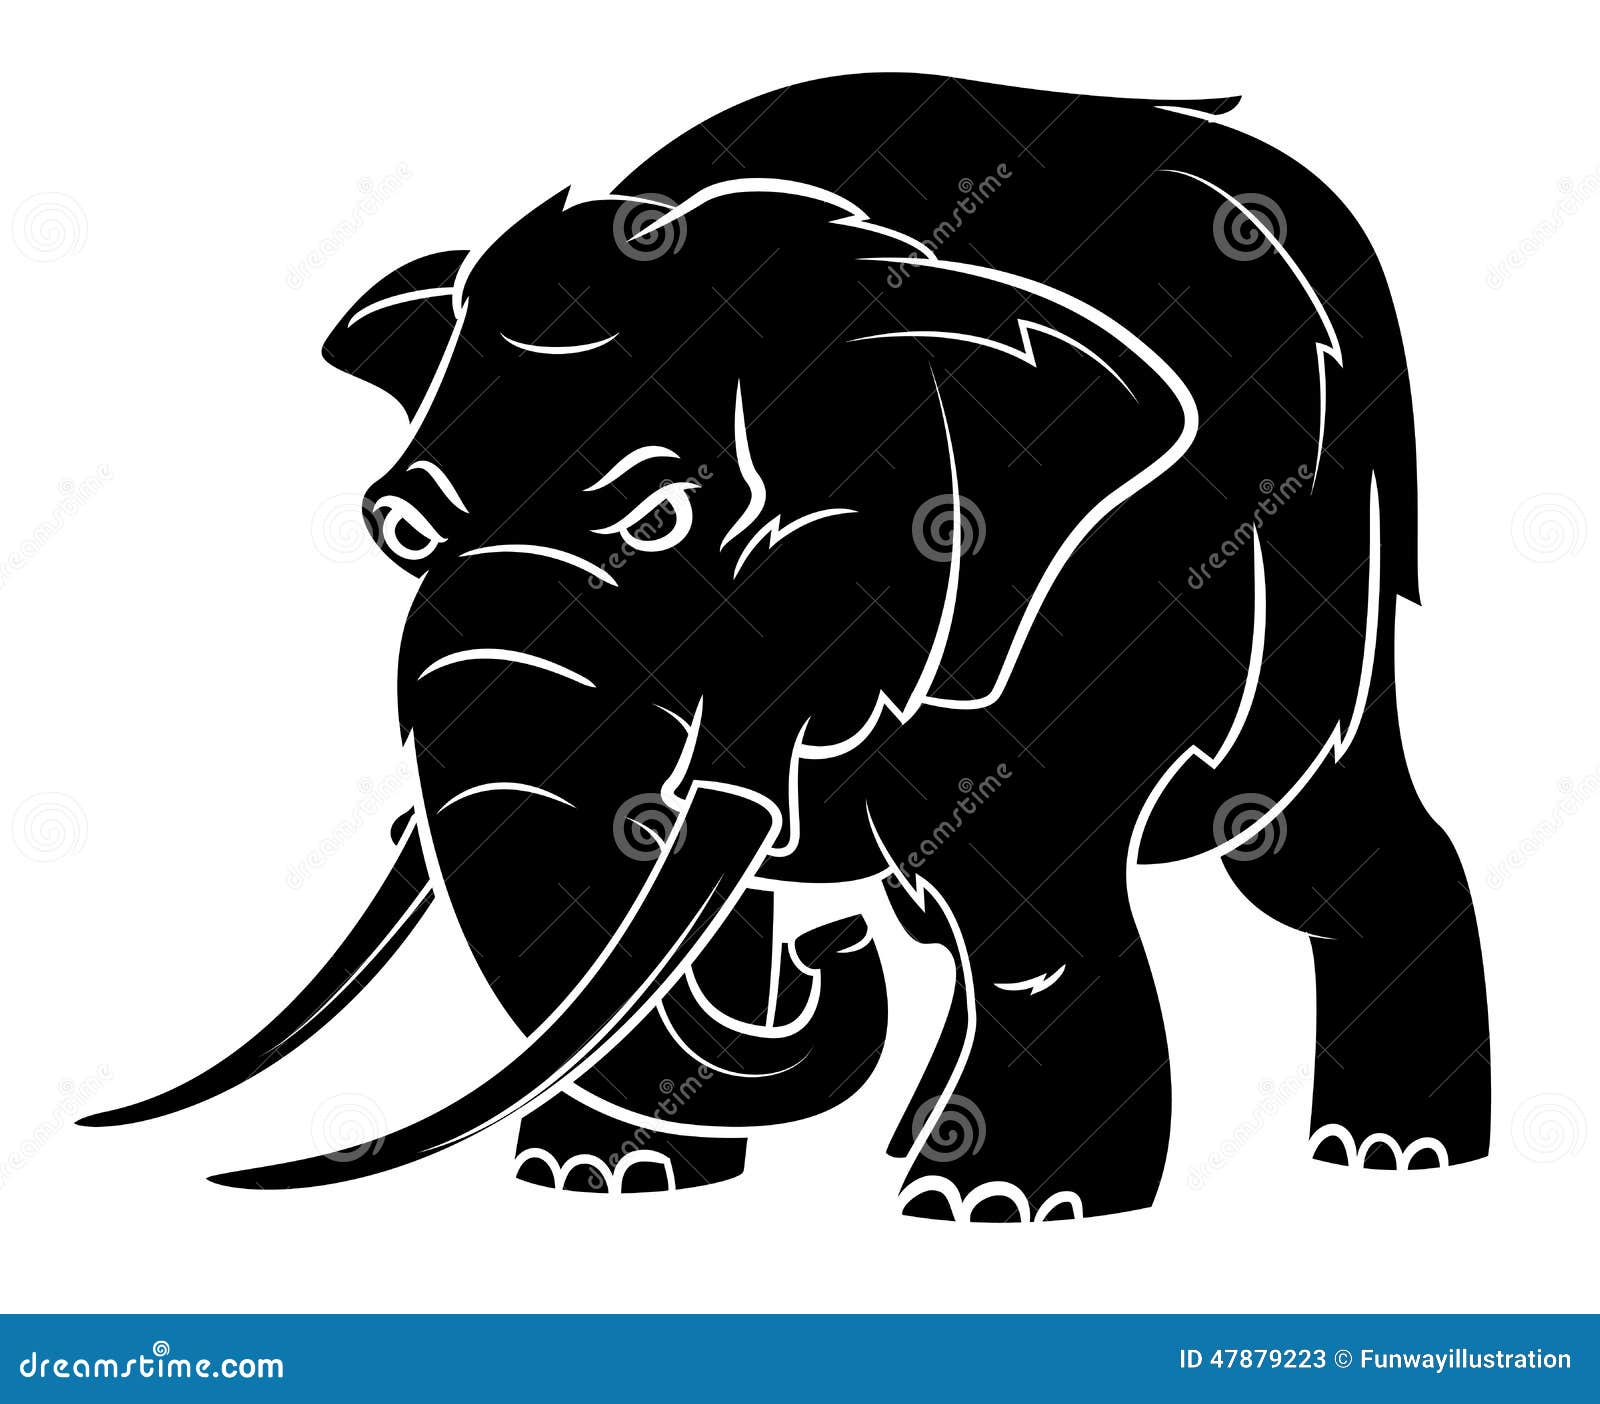 Elephant Trunk Stock Vector - Image: 47879223